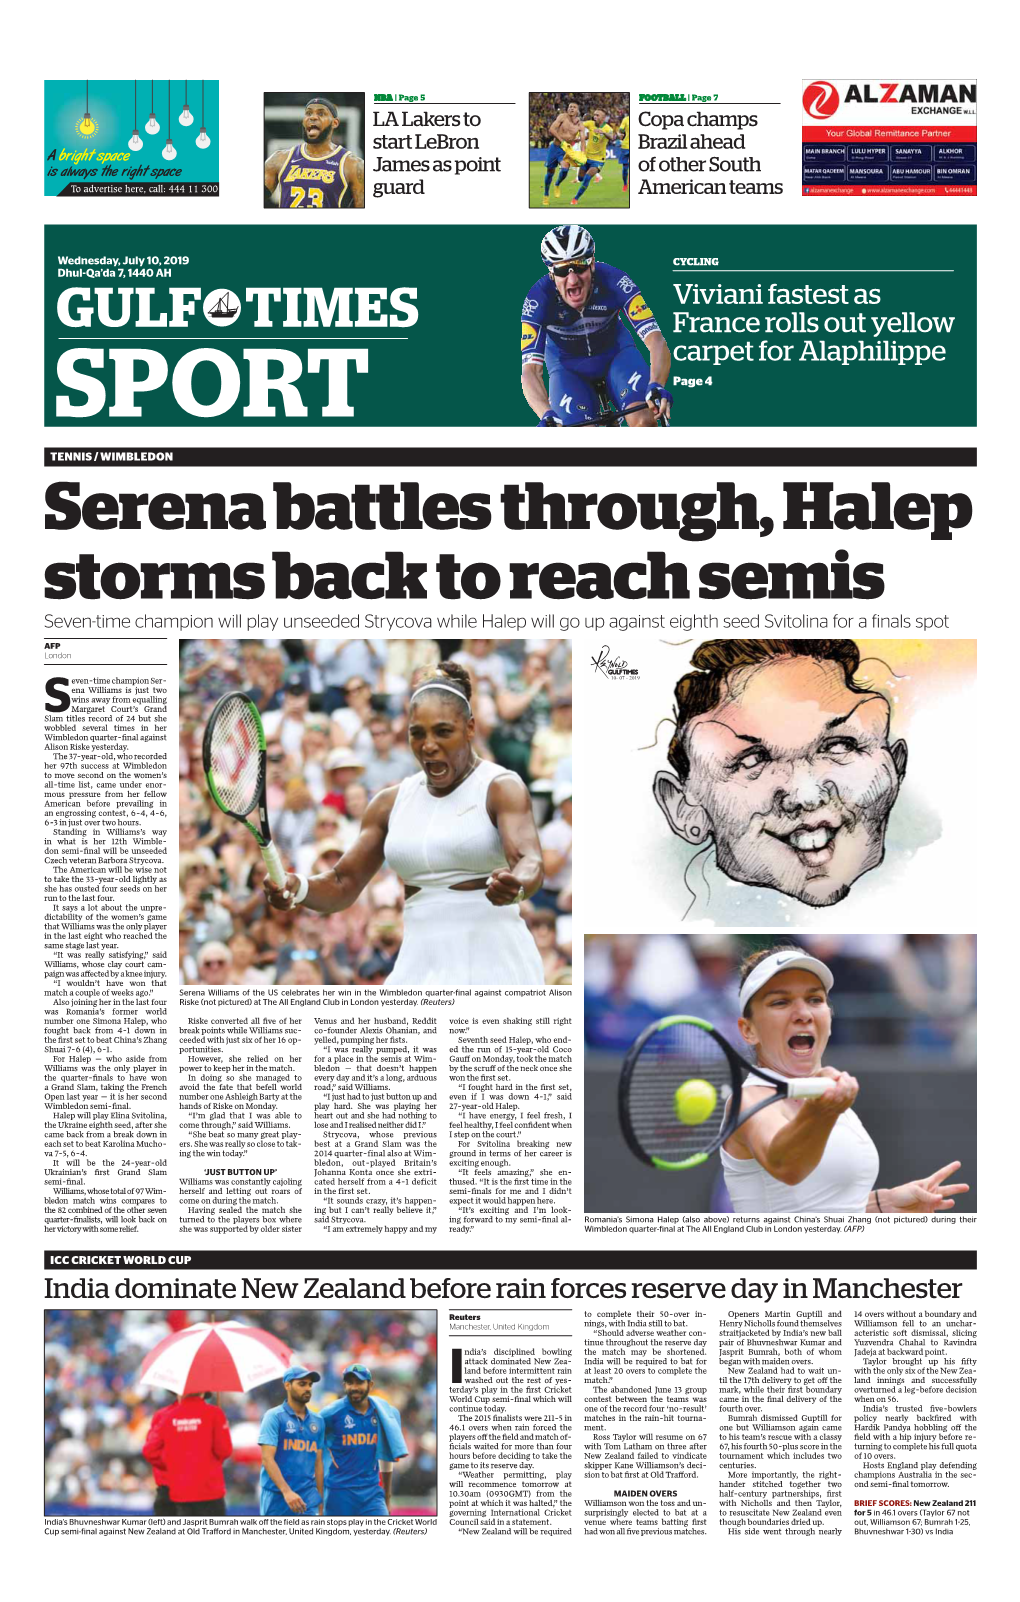 Serena Battles Through, Halep Storms Back to Reach Semis